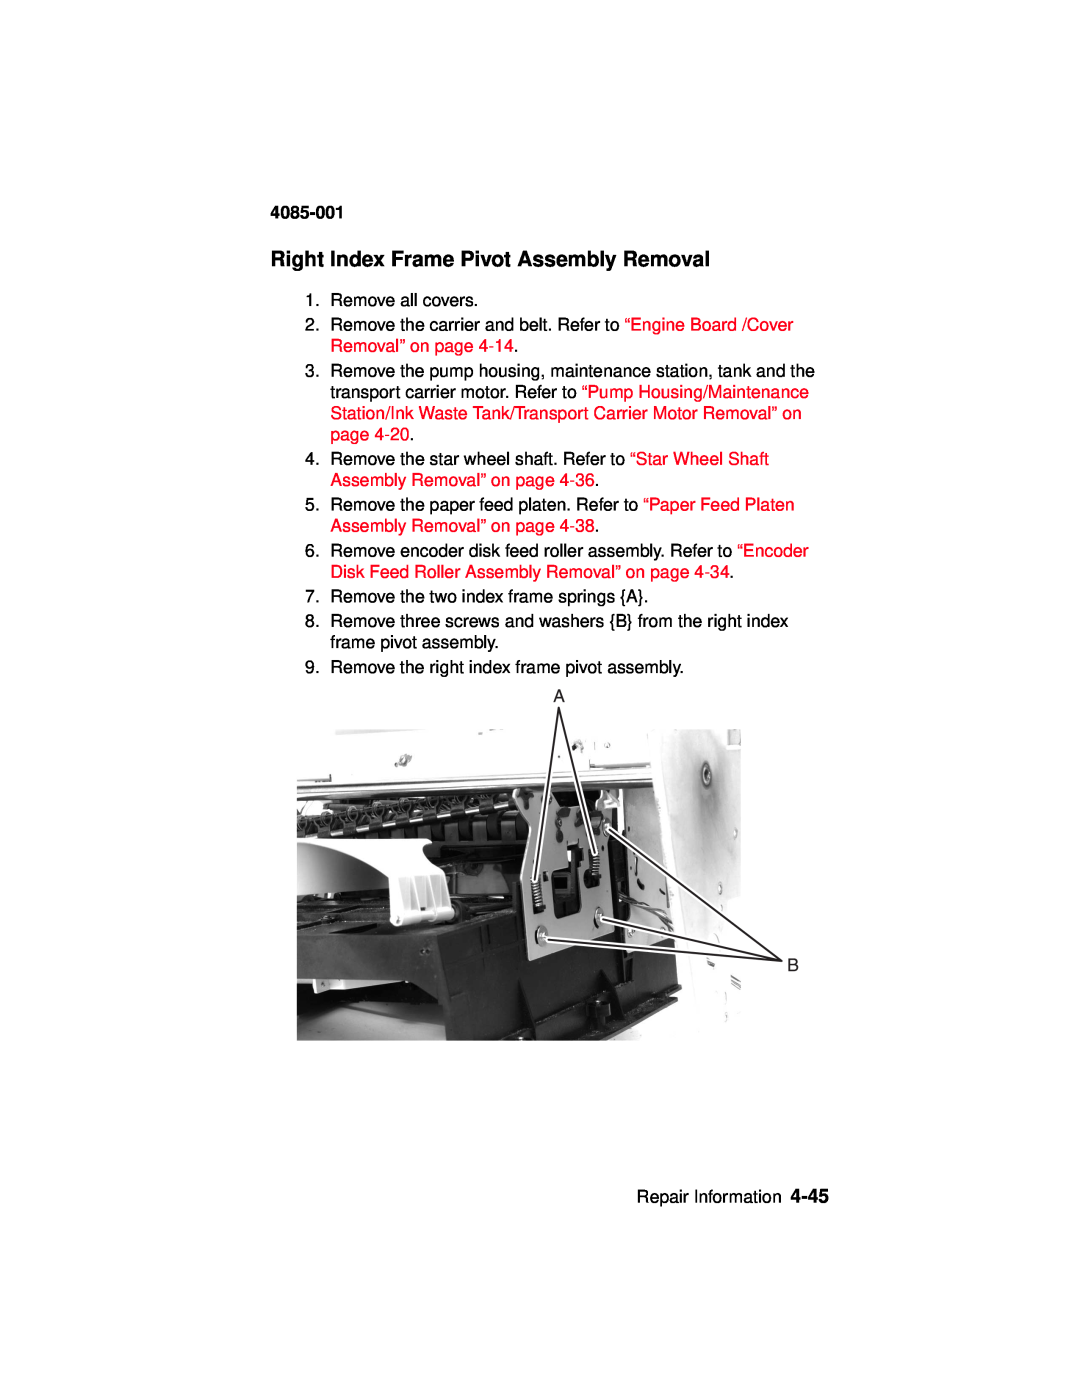 Lexmark Printer, J110 manual Right Index Frame Pivot Assembly Removal, 4085-001 